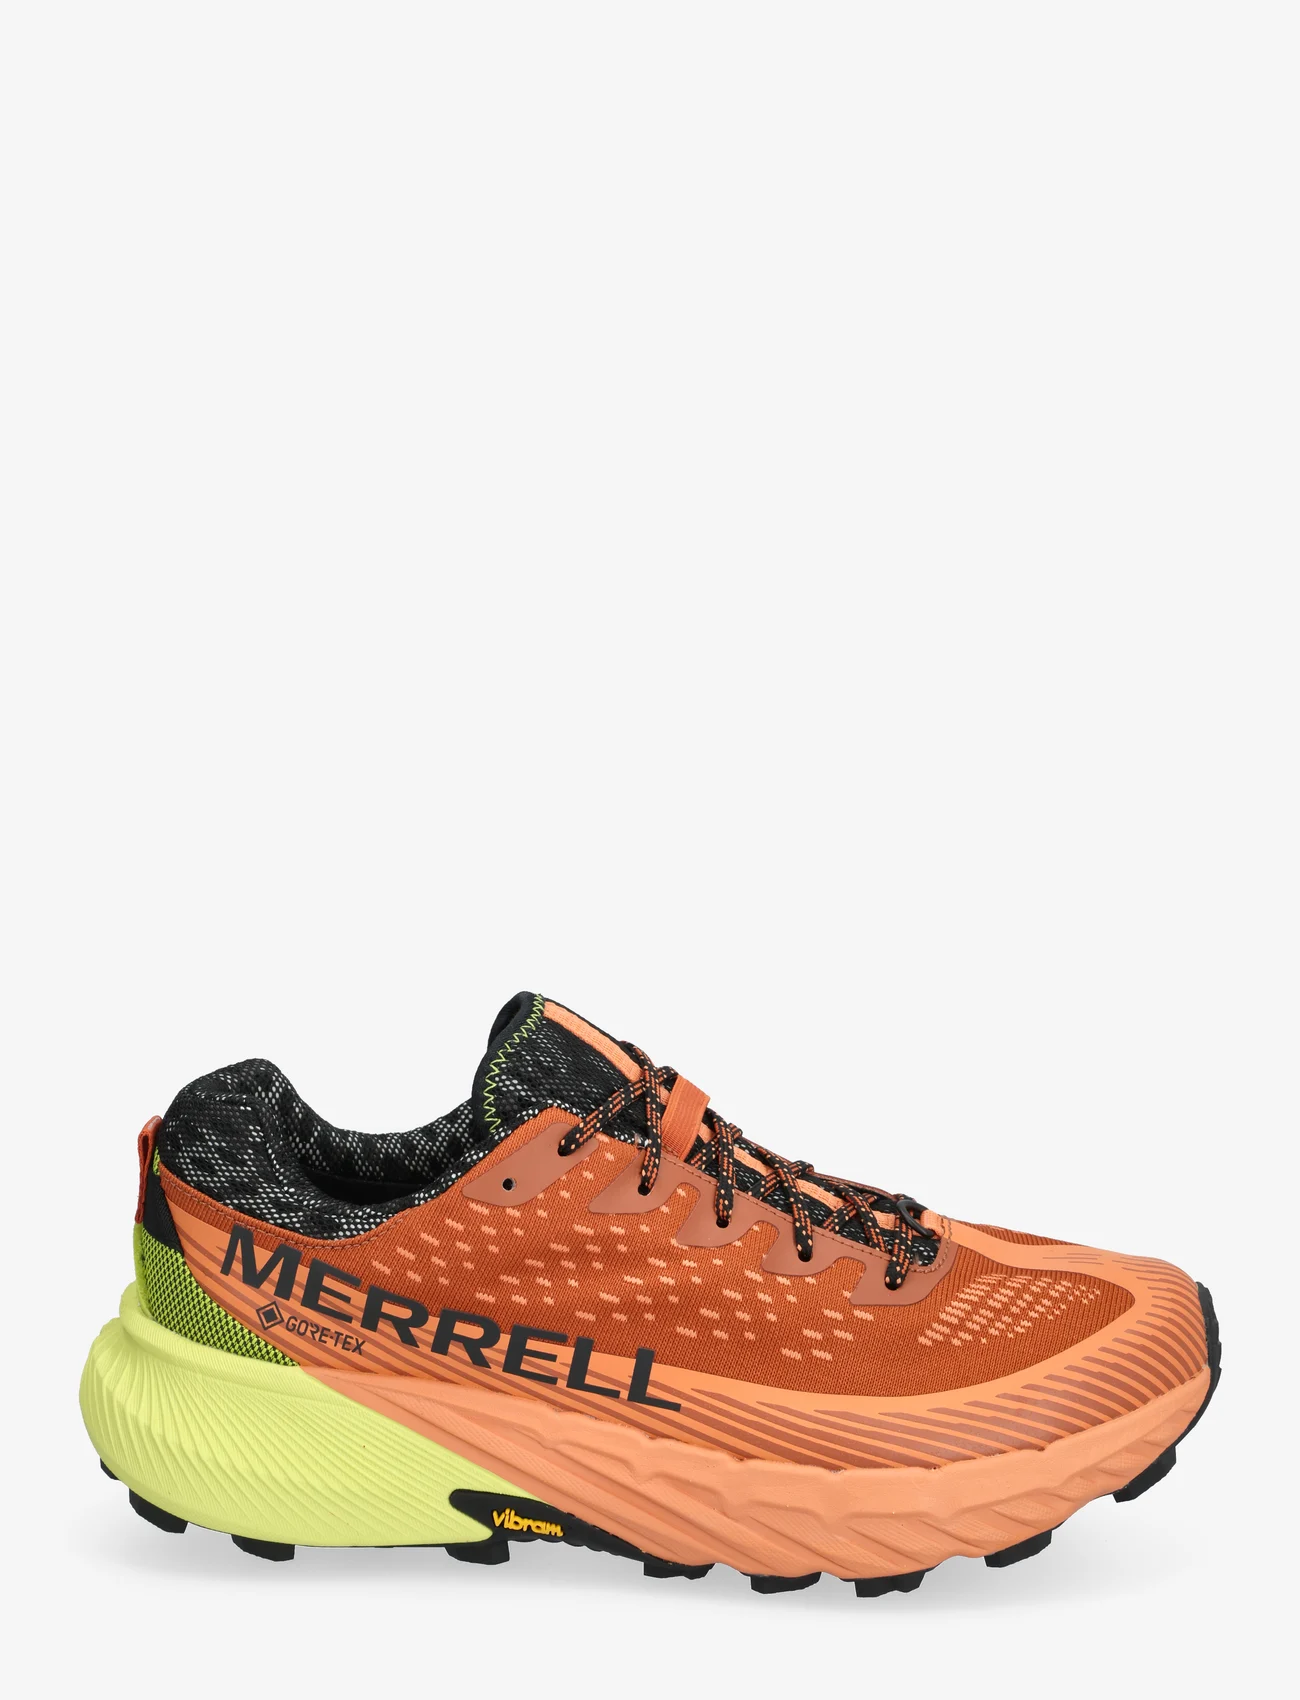 Merrell - Men's Agility Peak 5 GTX - Clay/Mel - løpesko - clay/melon - 1